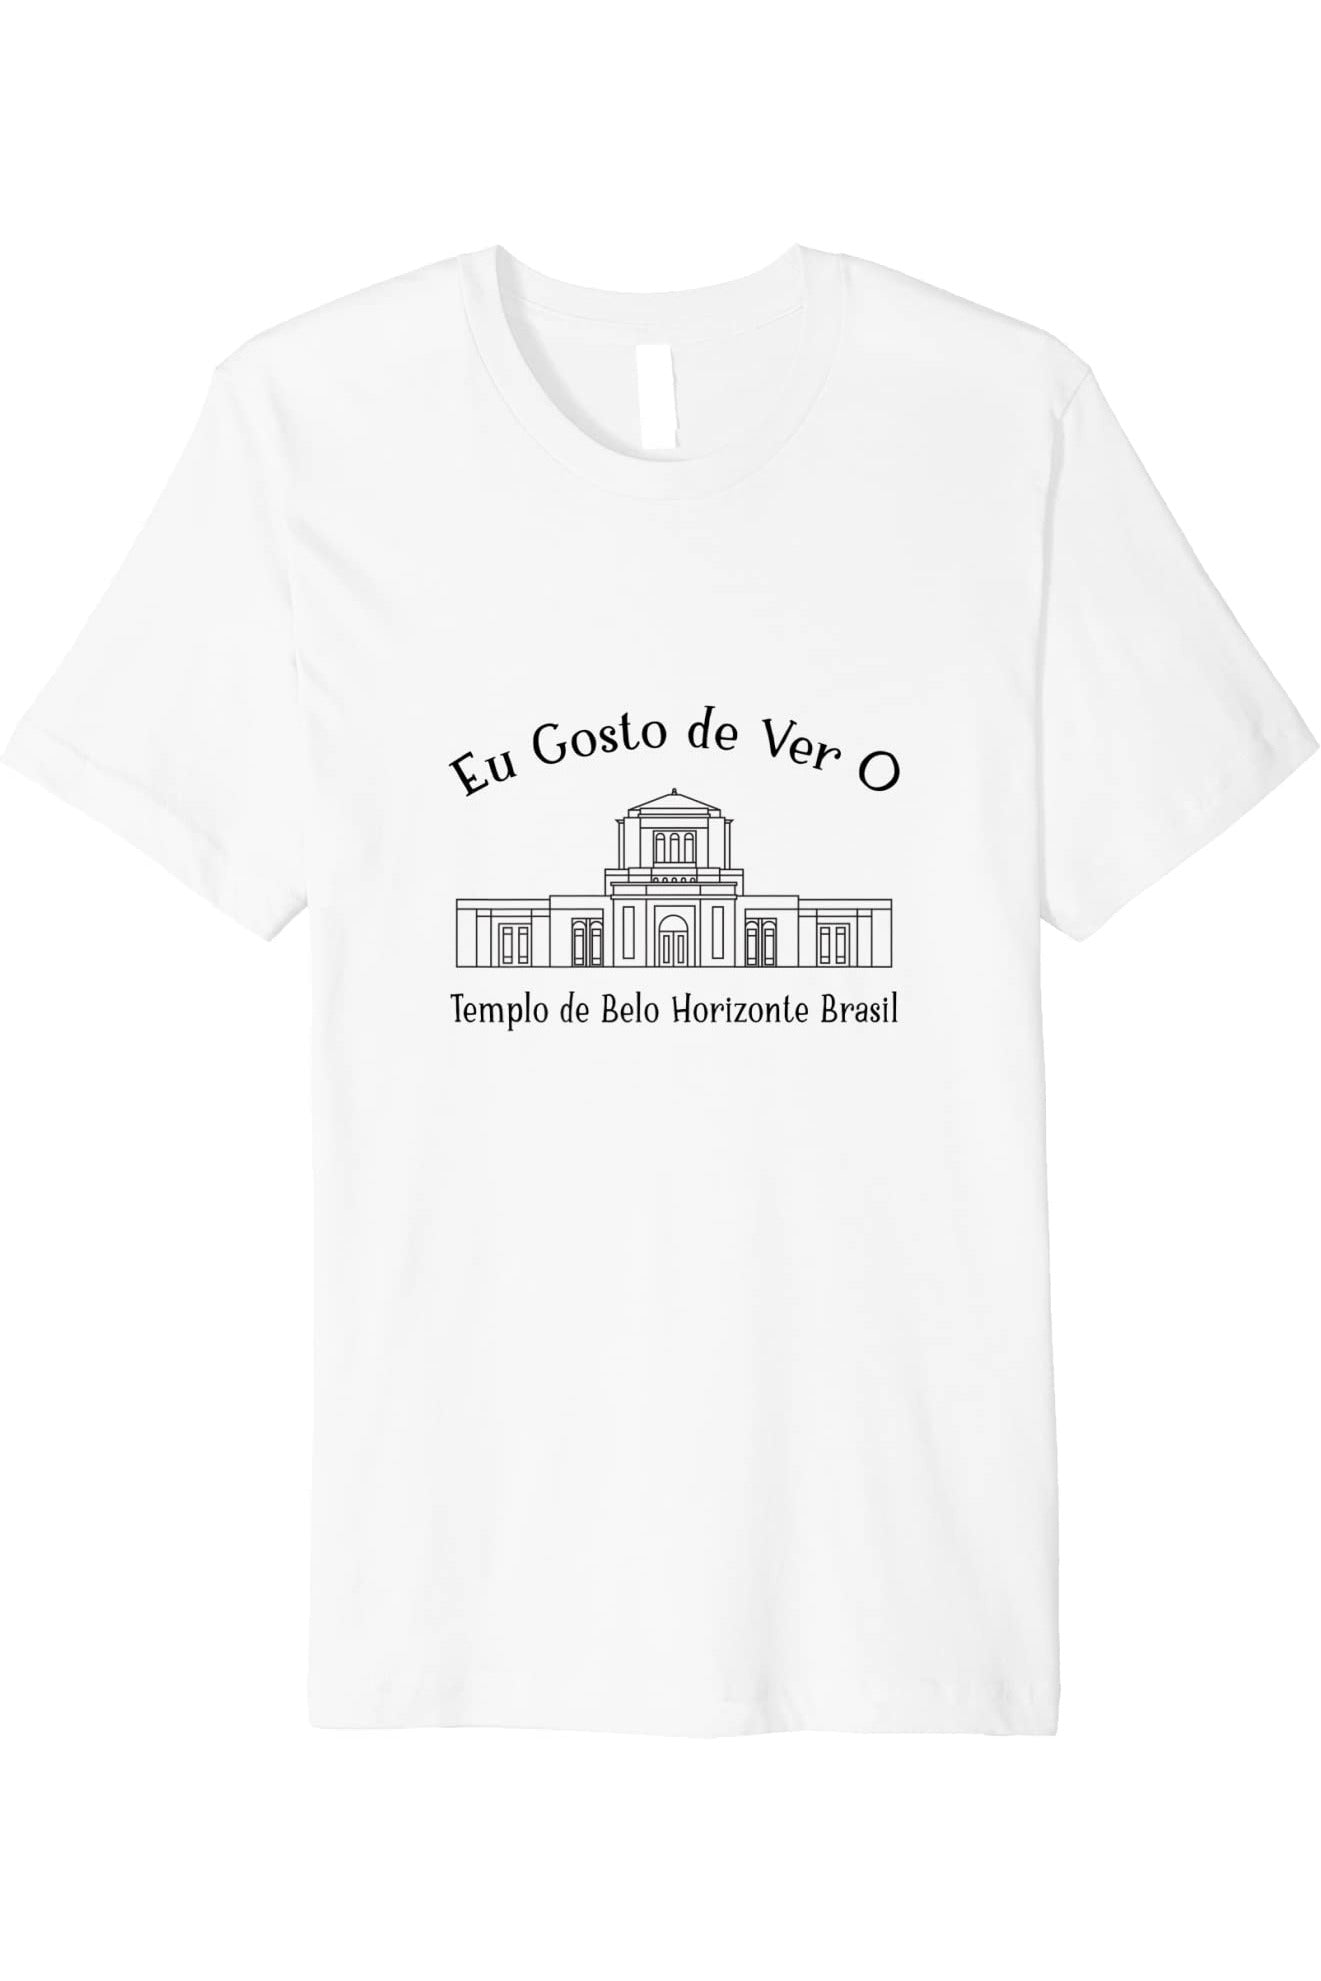 Belo Horizonte Brazil Temple T-Shirt - Premium - Happy Style (Portuguese) US